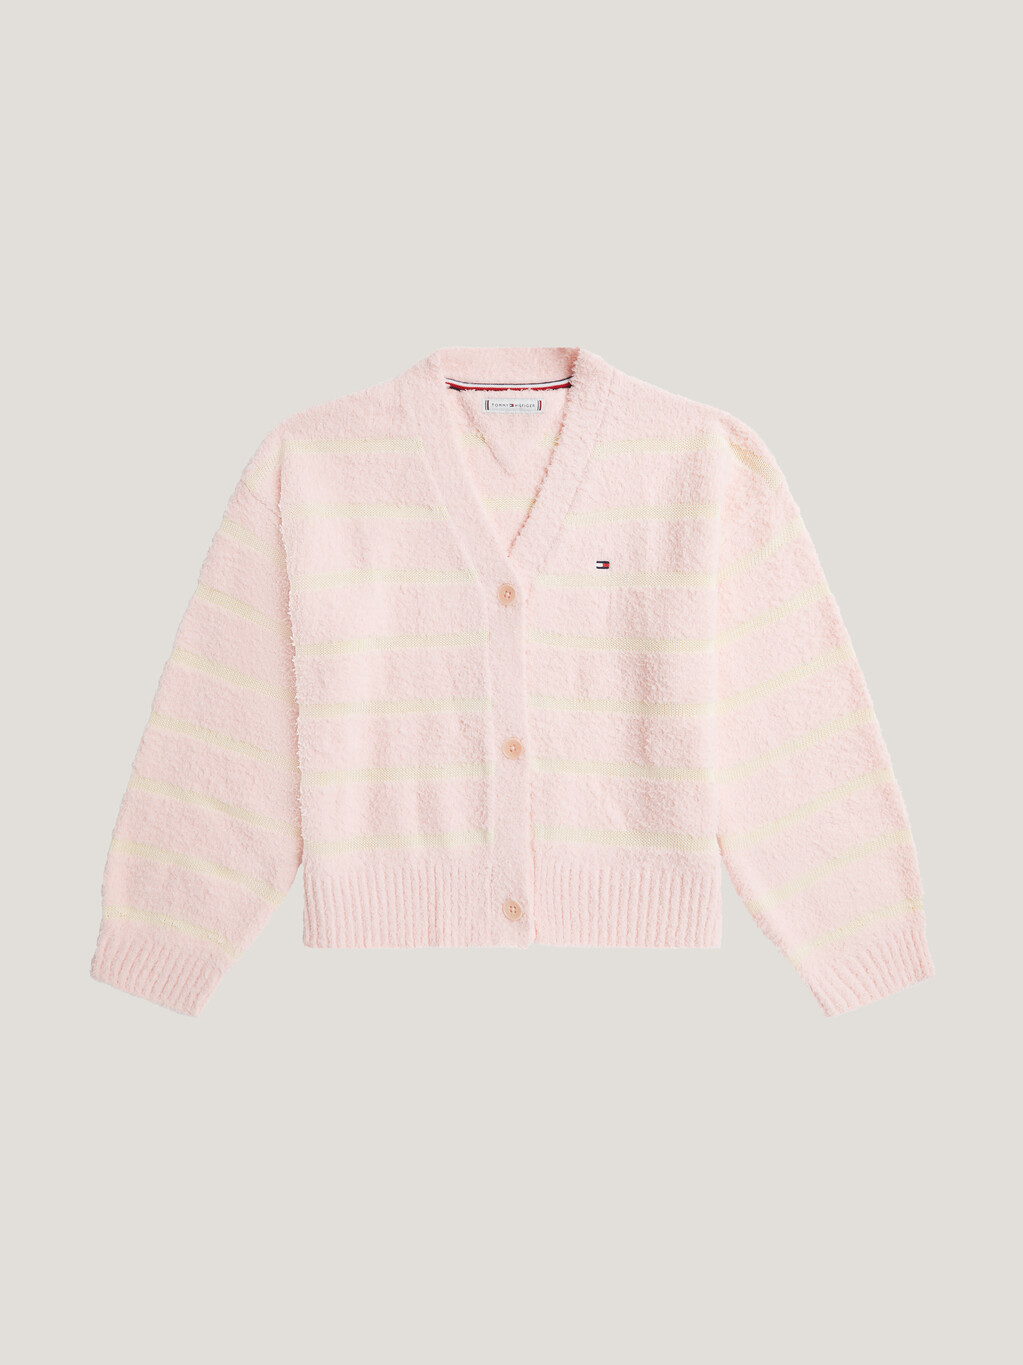 女童裝混合條紋開襟外套, Whimsy Pink / Calico Stripe, hi-res